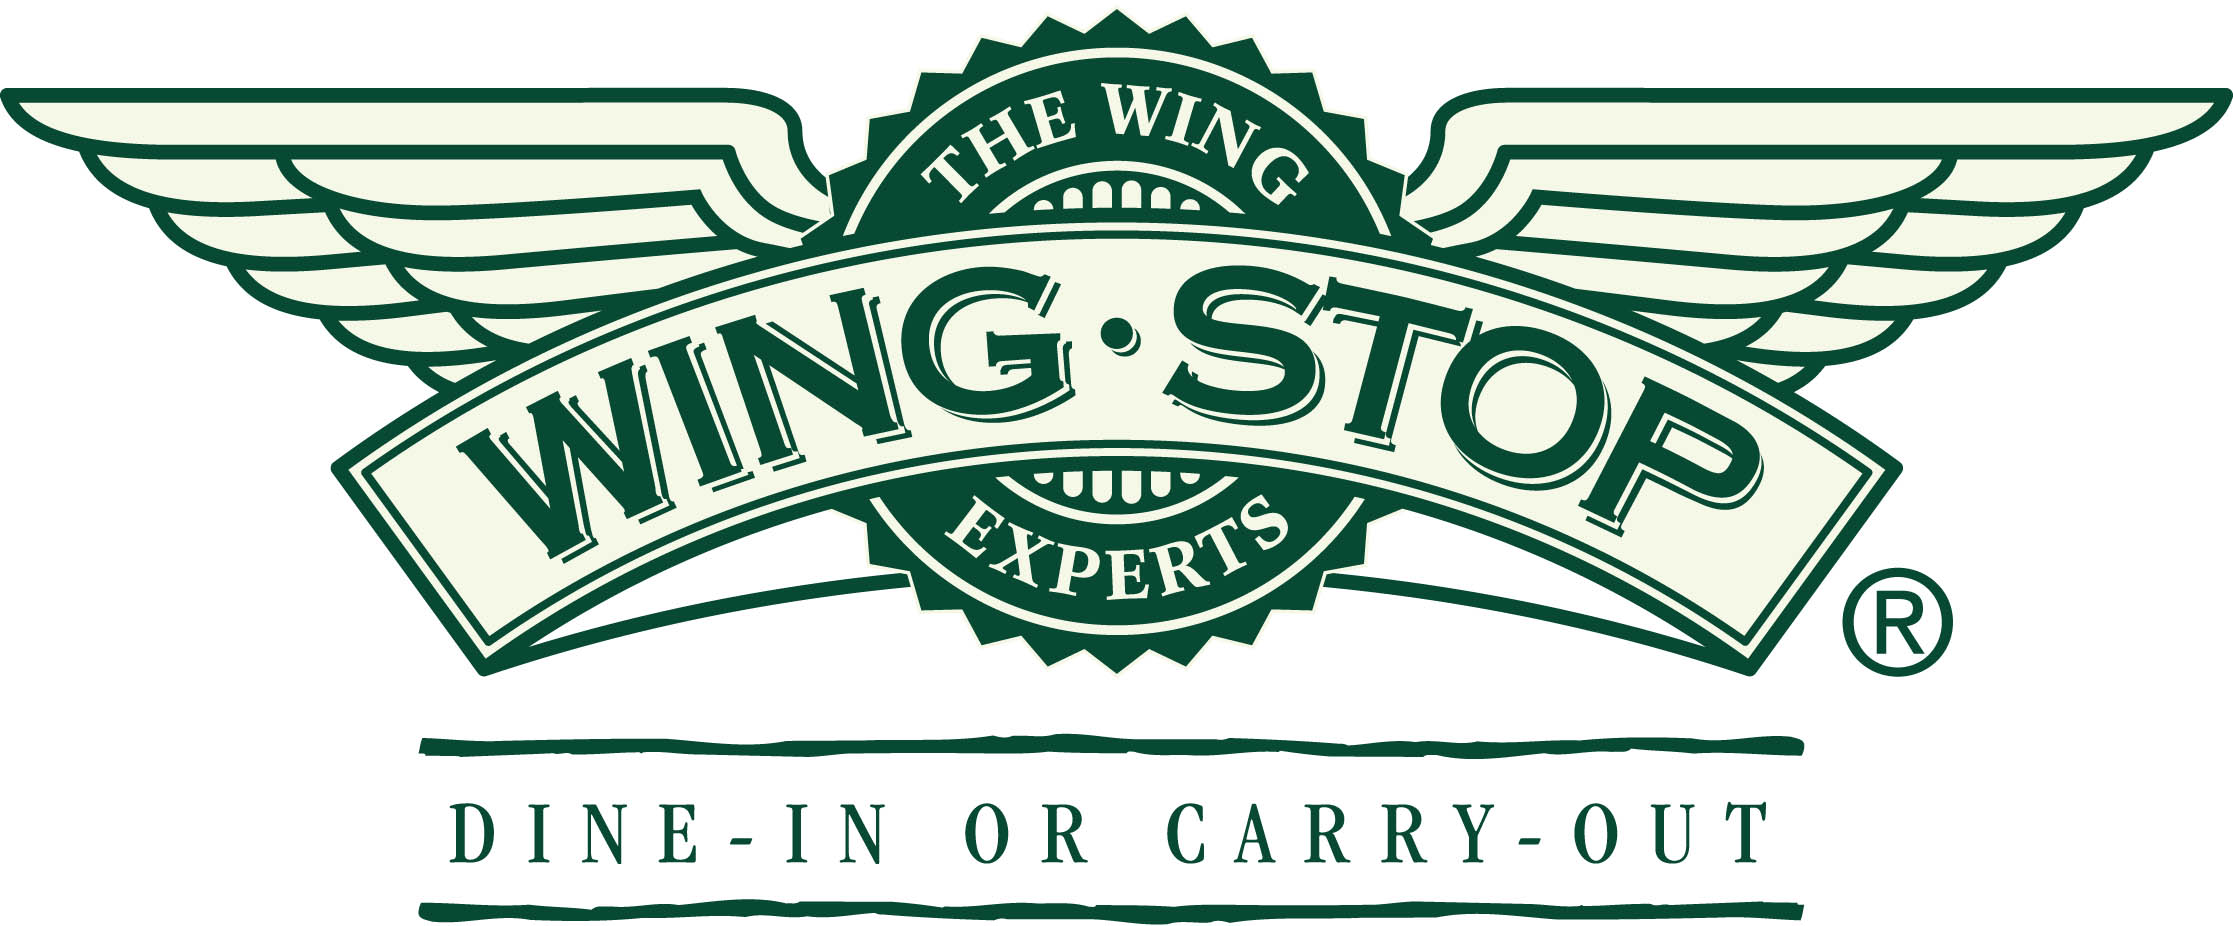 Wingstop Green_Cream logo_CMYK